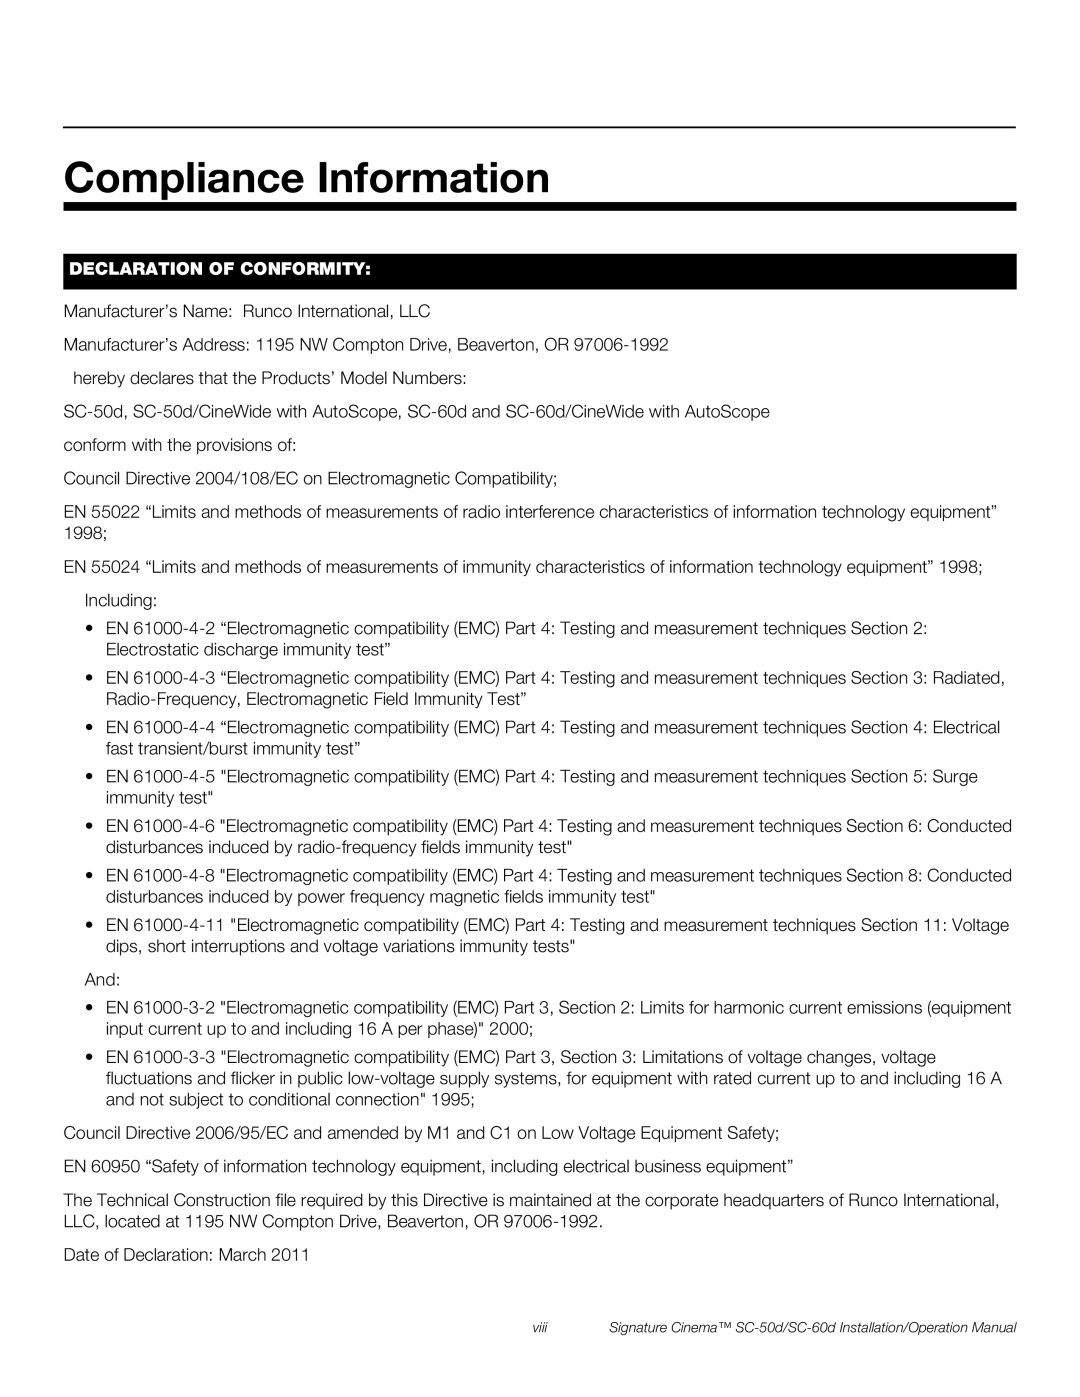 Runco SC-60D, SC-50D operation manual Compliance Information, Declaration Of Conformity 